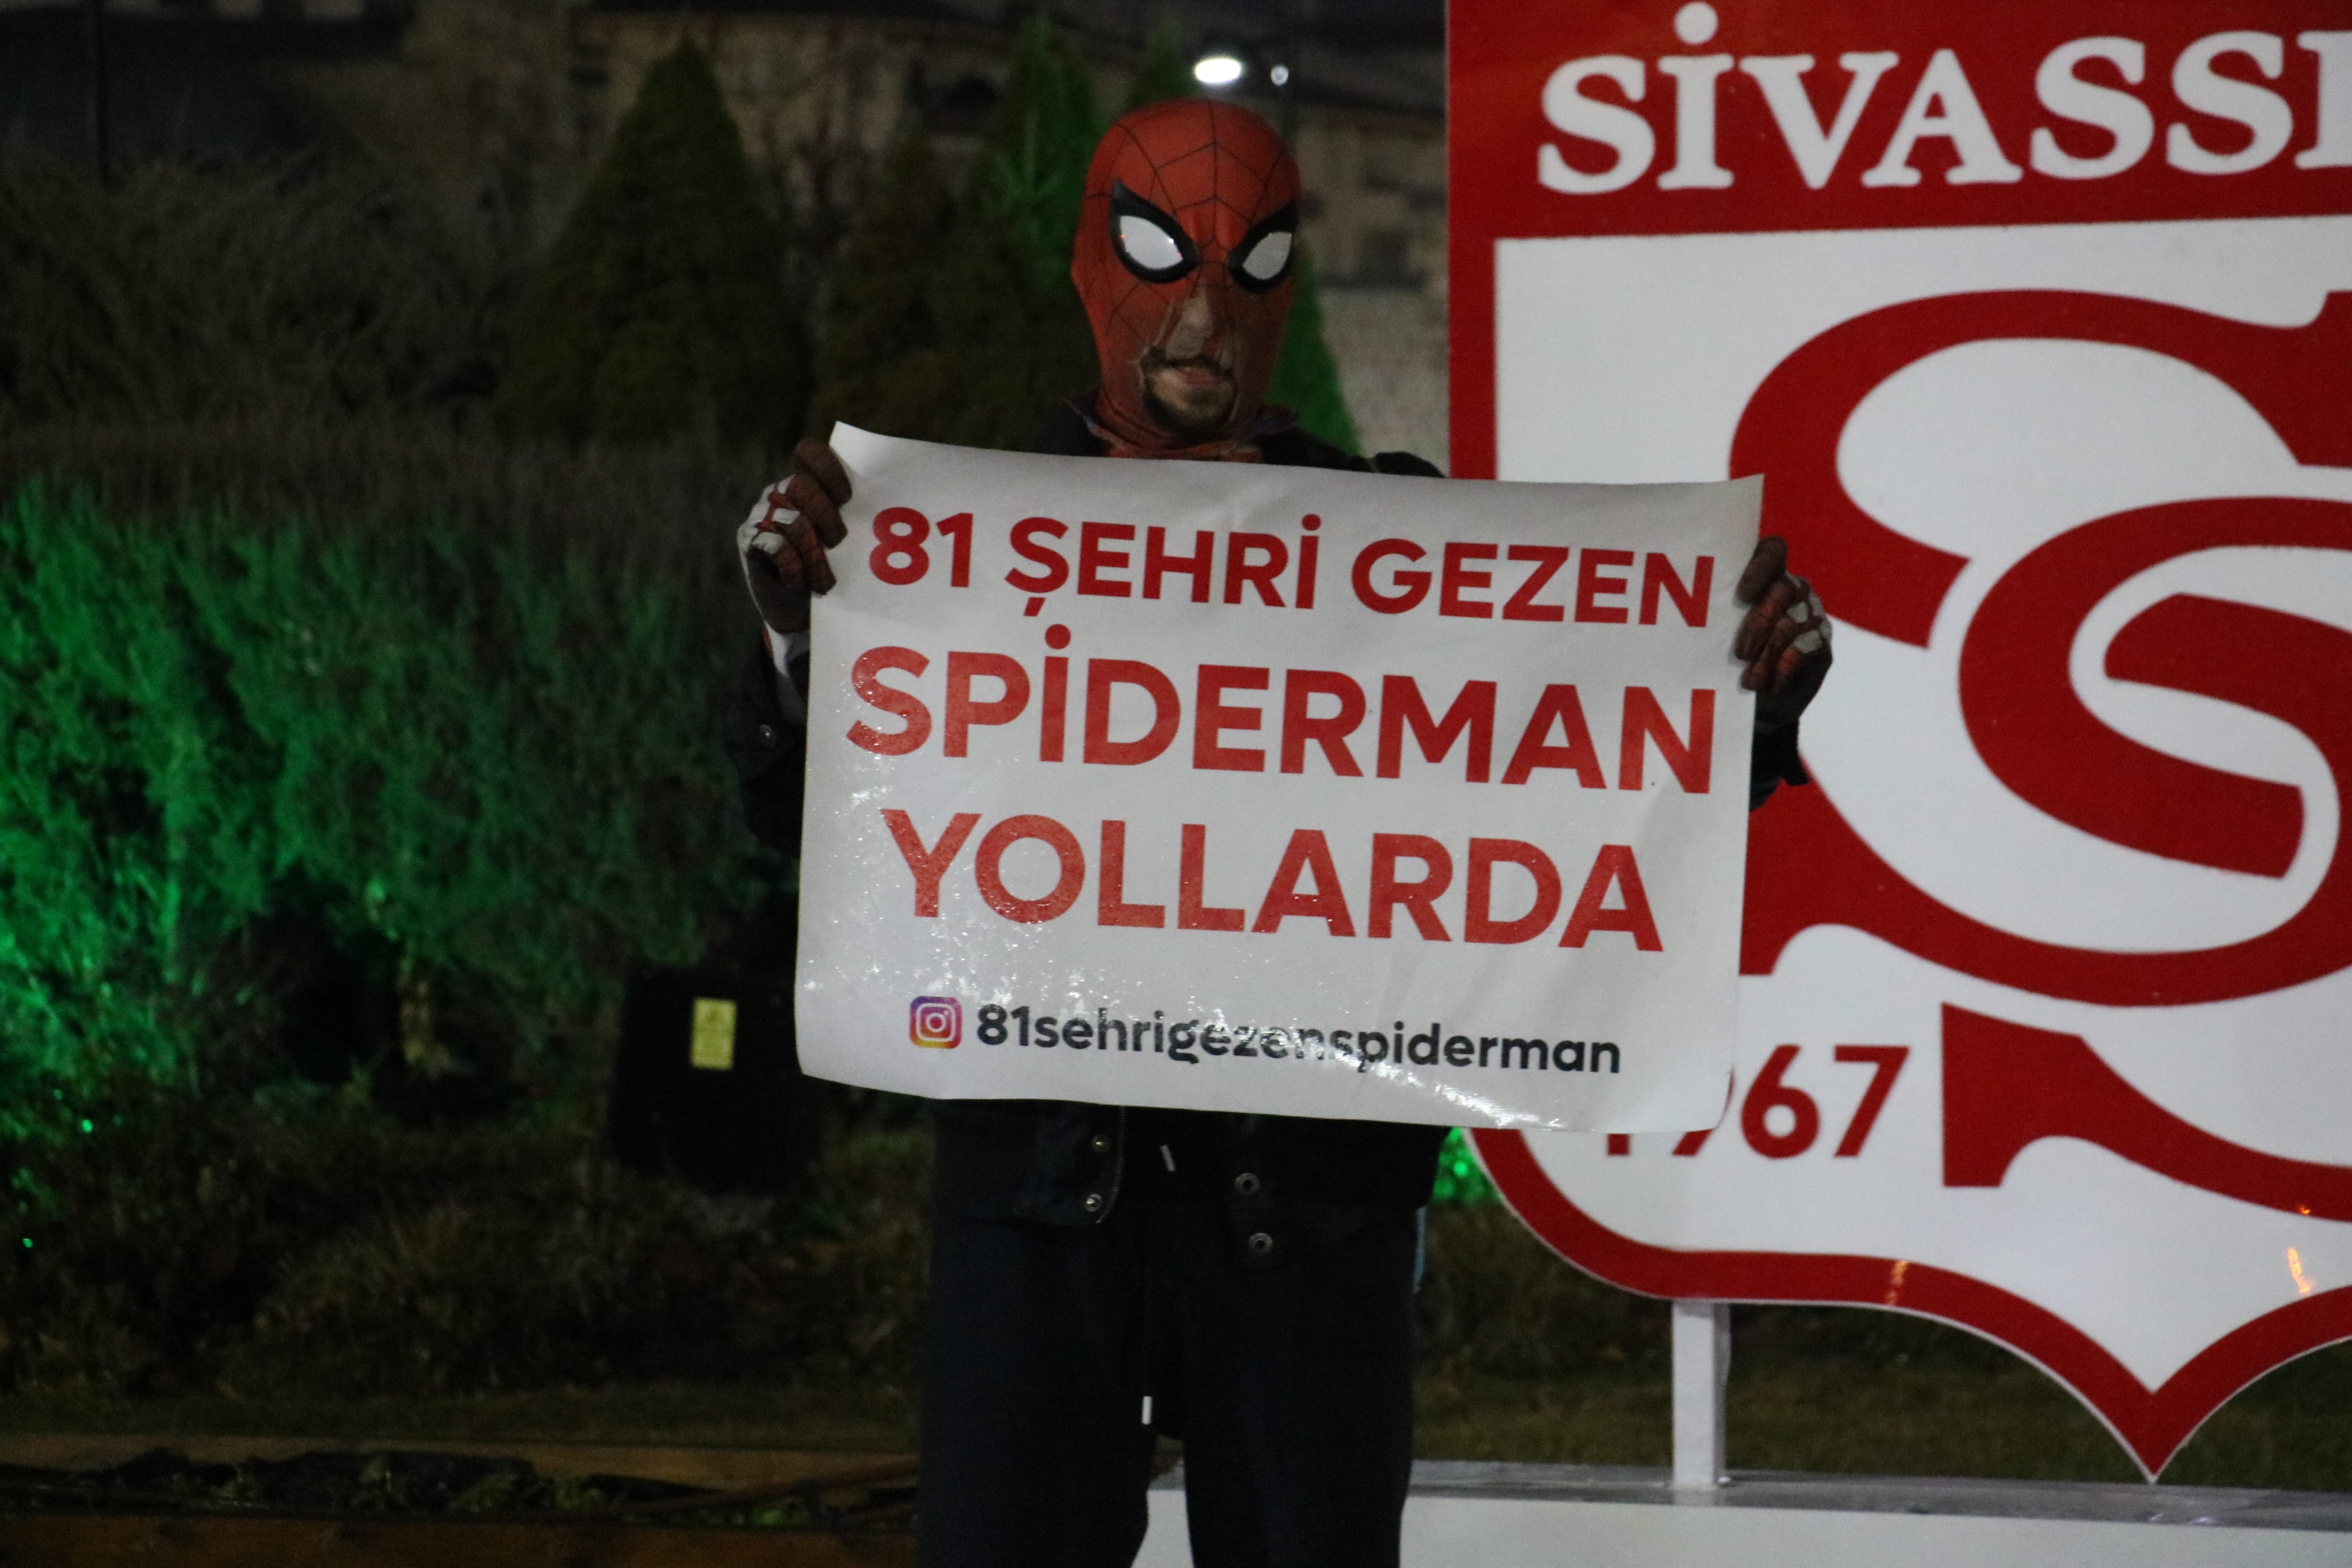 spiderman sivas (2)